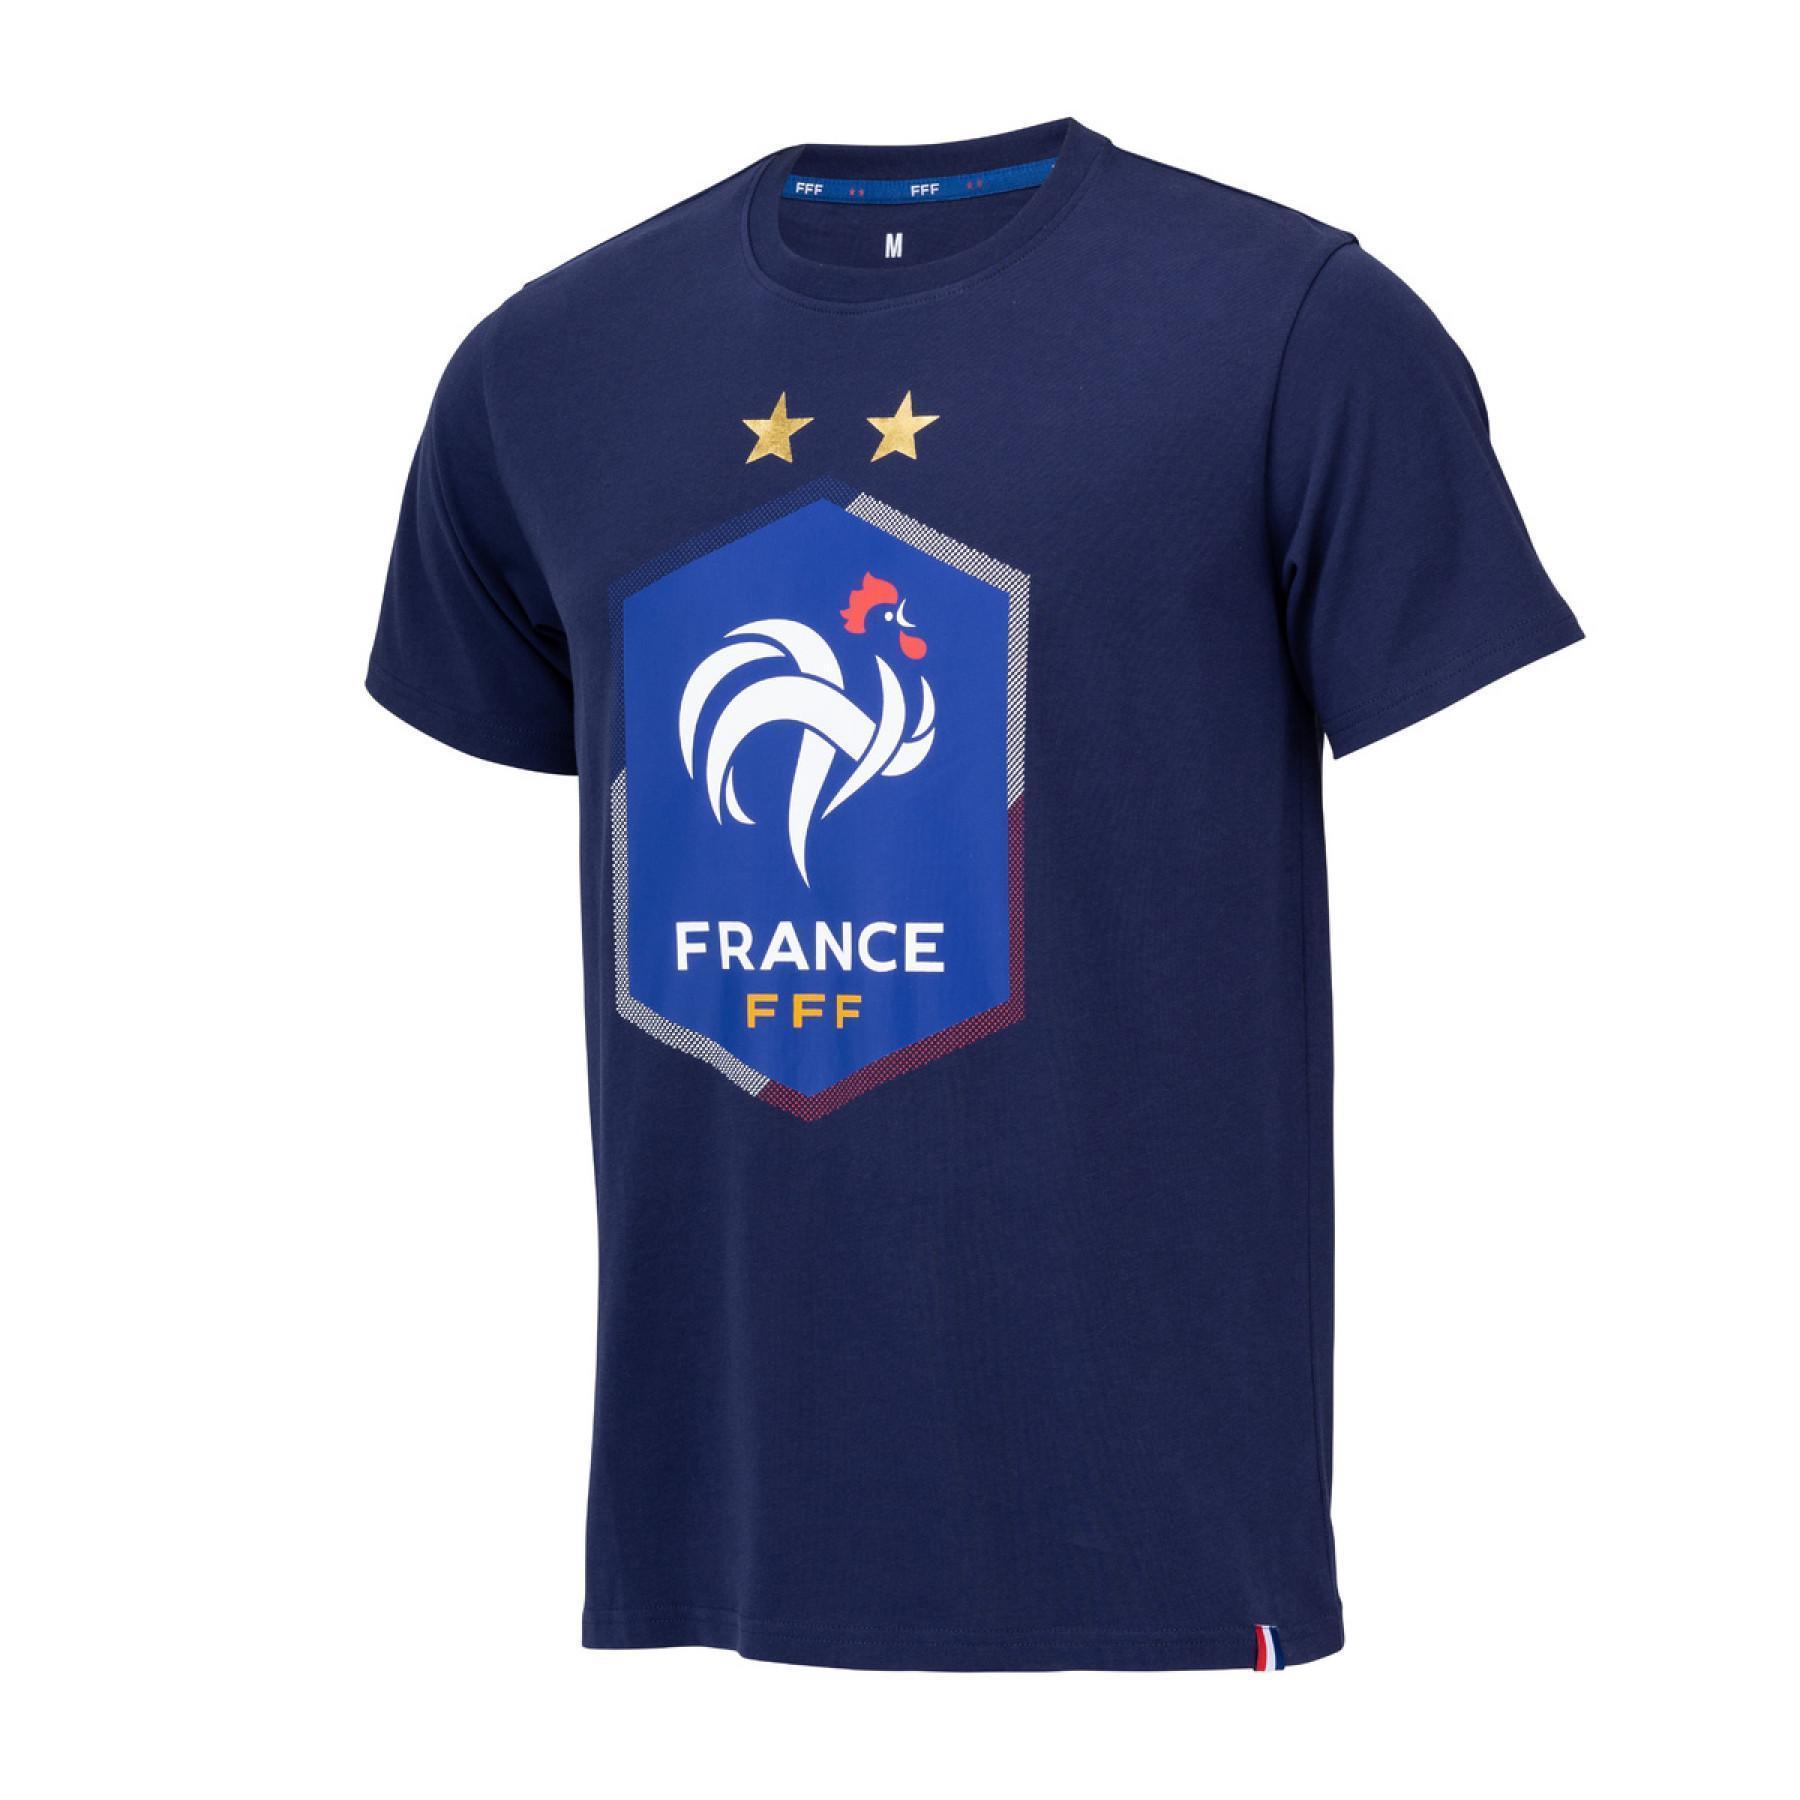 Kinder-T-Shirt Frankreich Weeplay Big logo